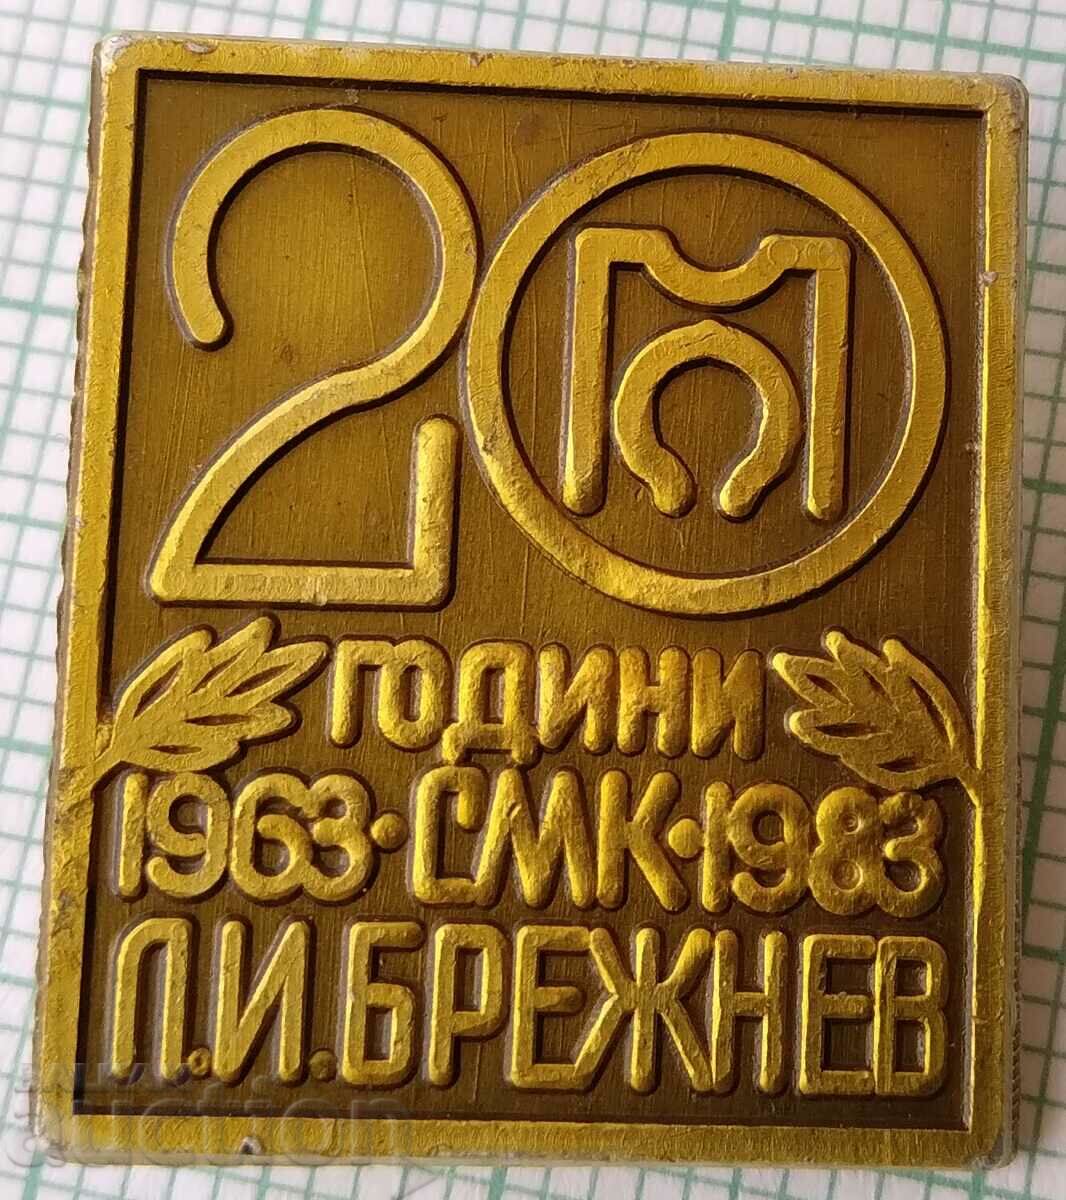 15669 Значка - 20 години СМК Л.И. Брежнев 1963-1983